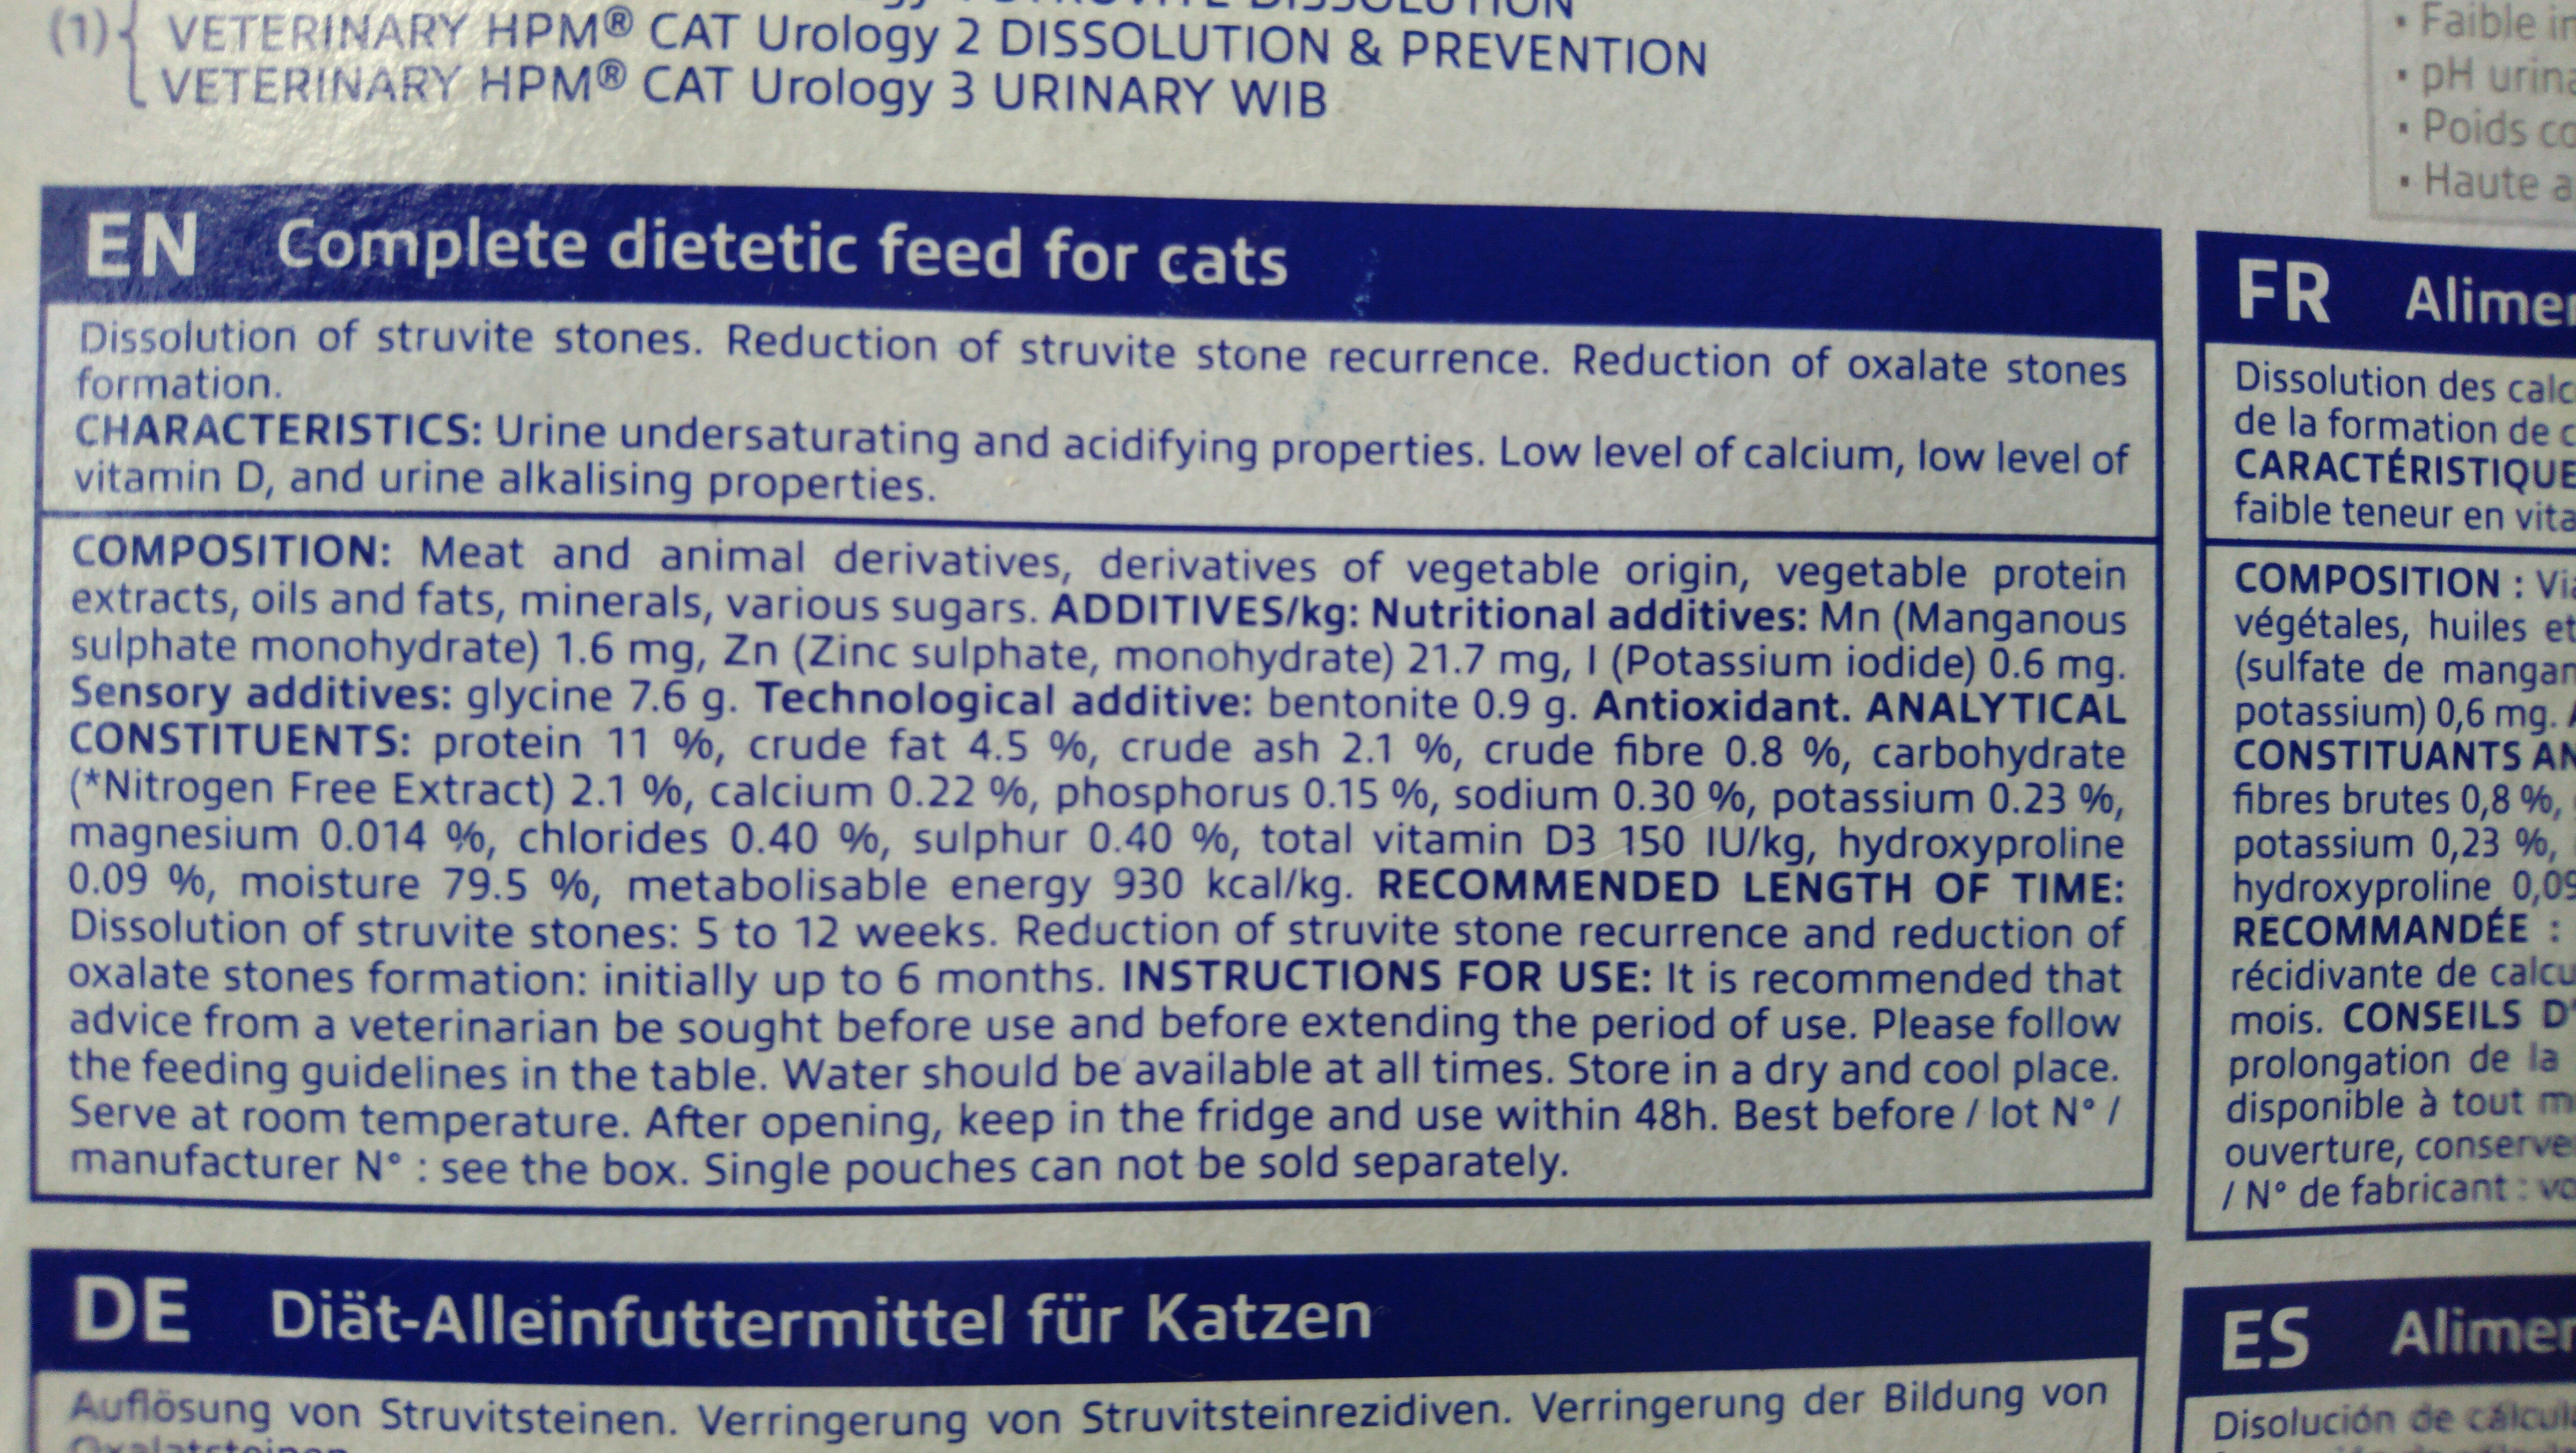 Veterinary HPM CAT Urology 2 Dissolution & Prevention - Nutrition facts - en